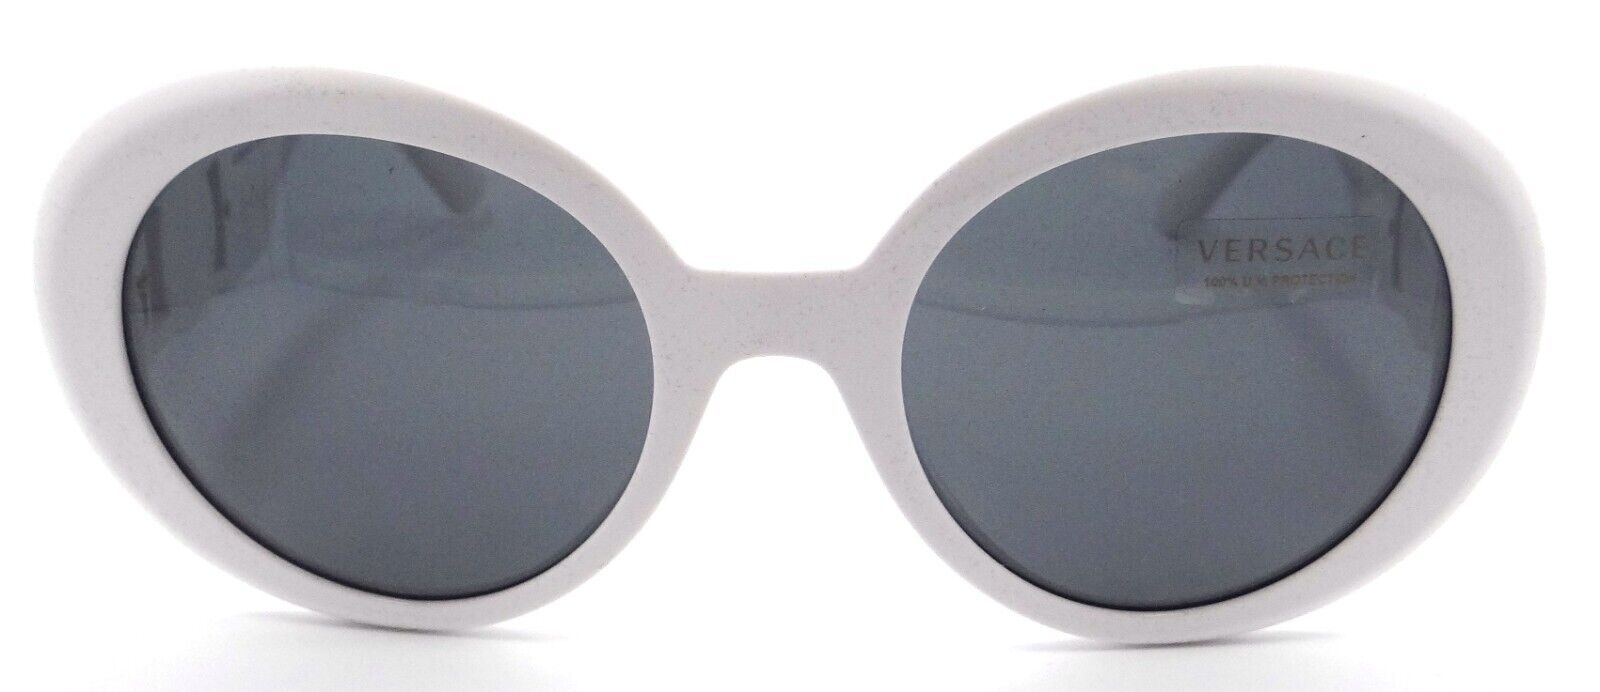 Versace Sunglasses VE 4414 314/87 55-22-145 White / Dark Grey Made in Italy-8056597618151-classypw.com-1